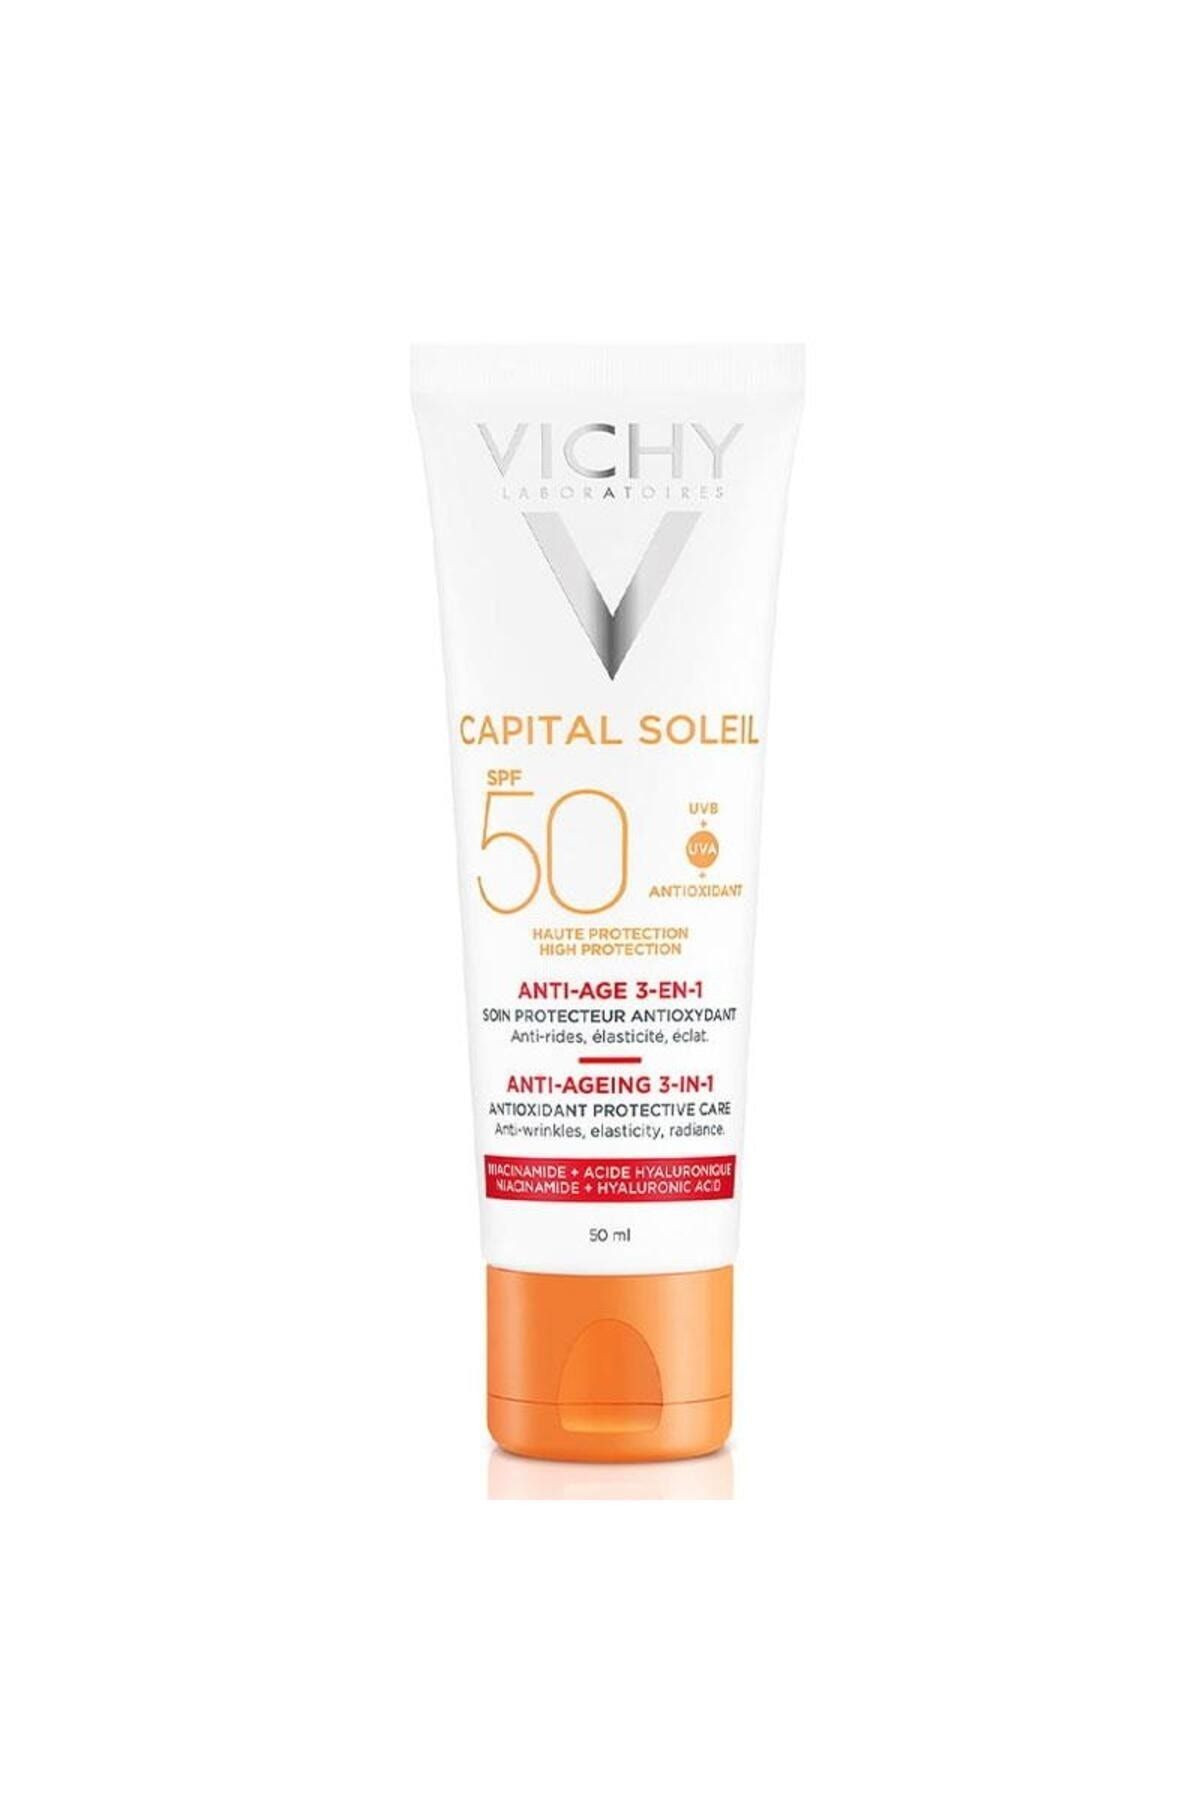 Vichy Capital Soleil SPF 50 Anti Aging 3-in-1 Güneş Kremi 50 ml